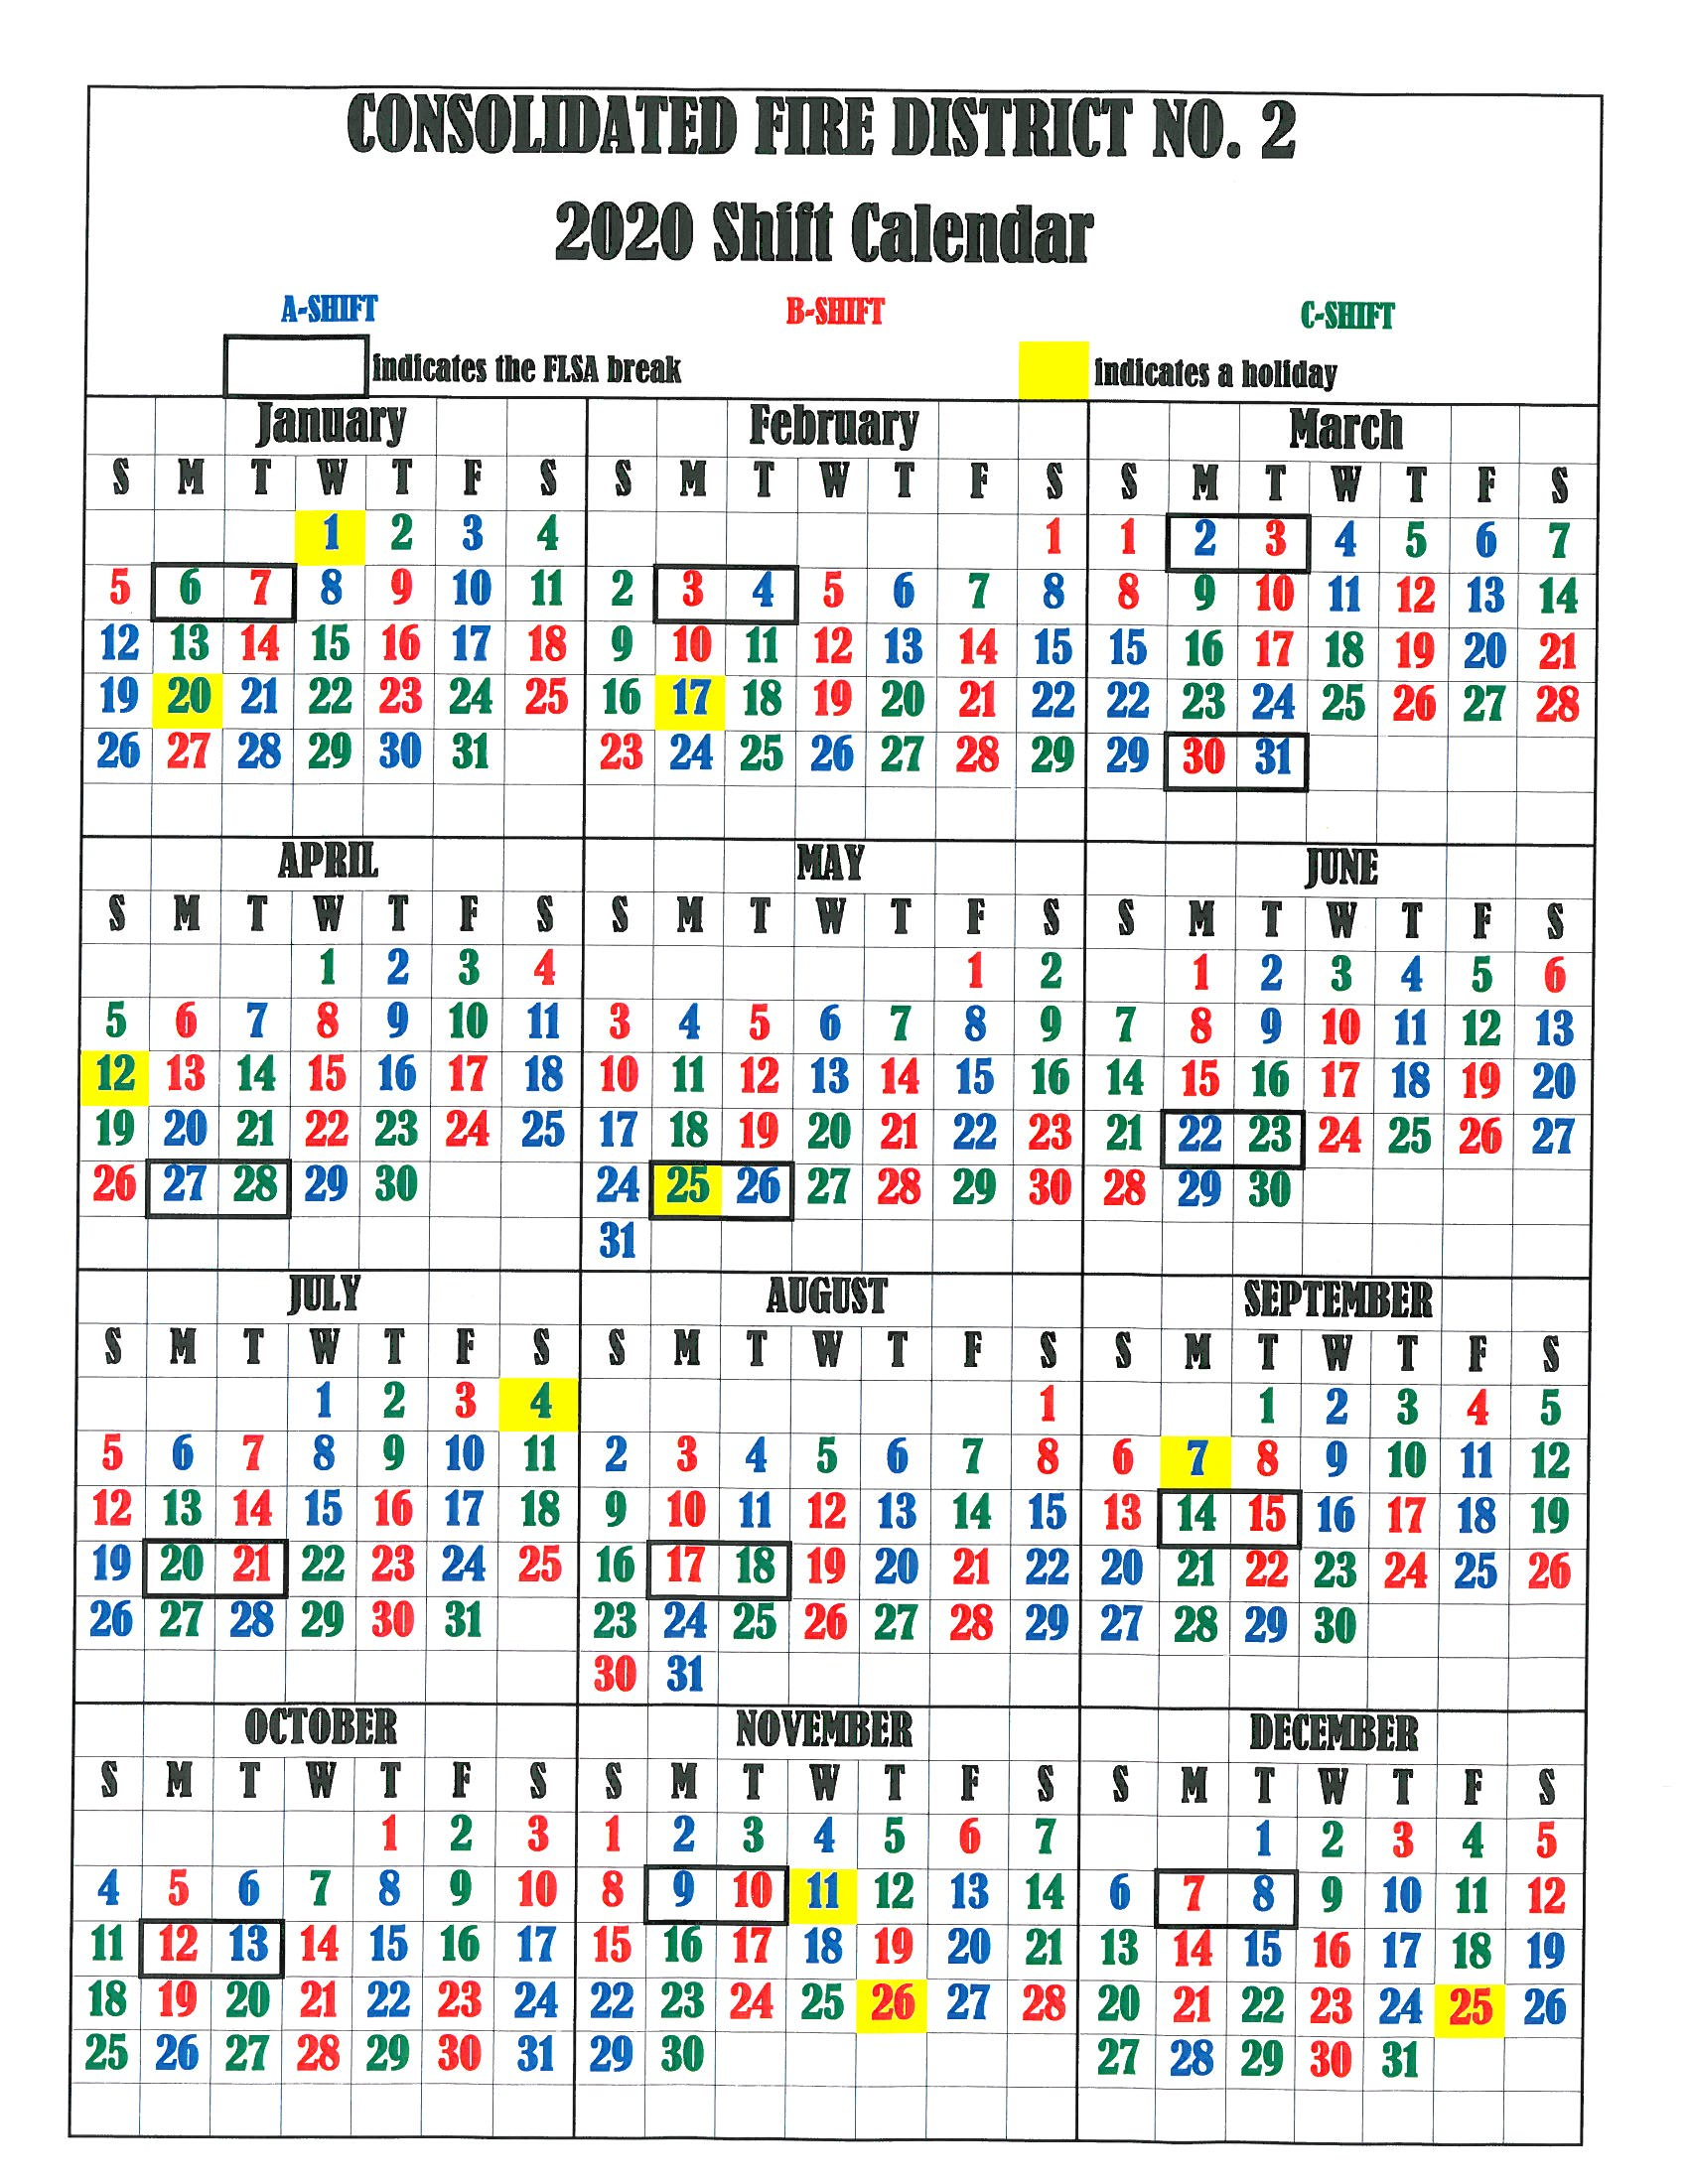 2020 Free Printable Calendar Large Numbers | Calendar